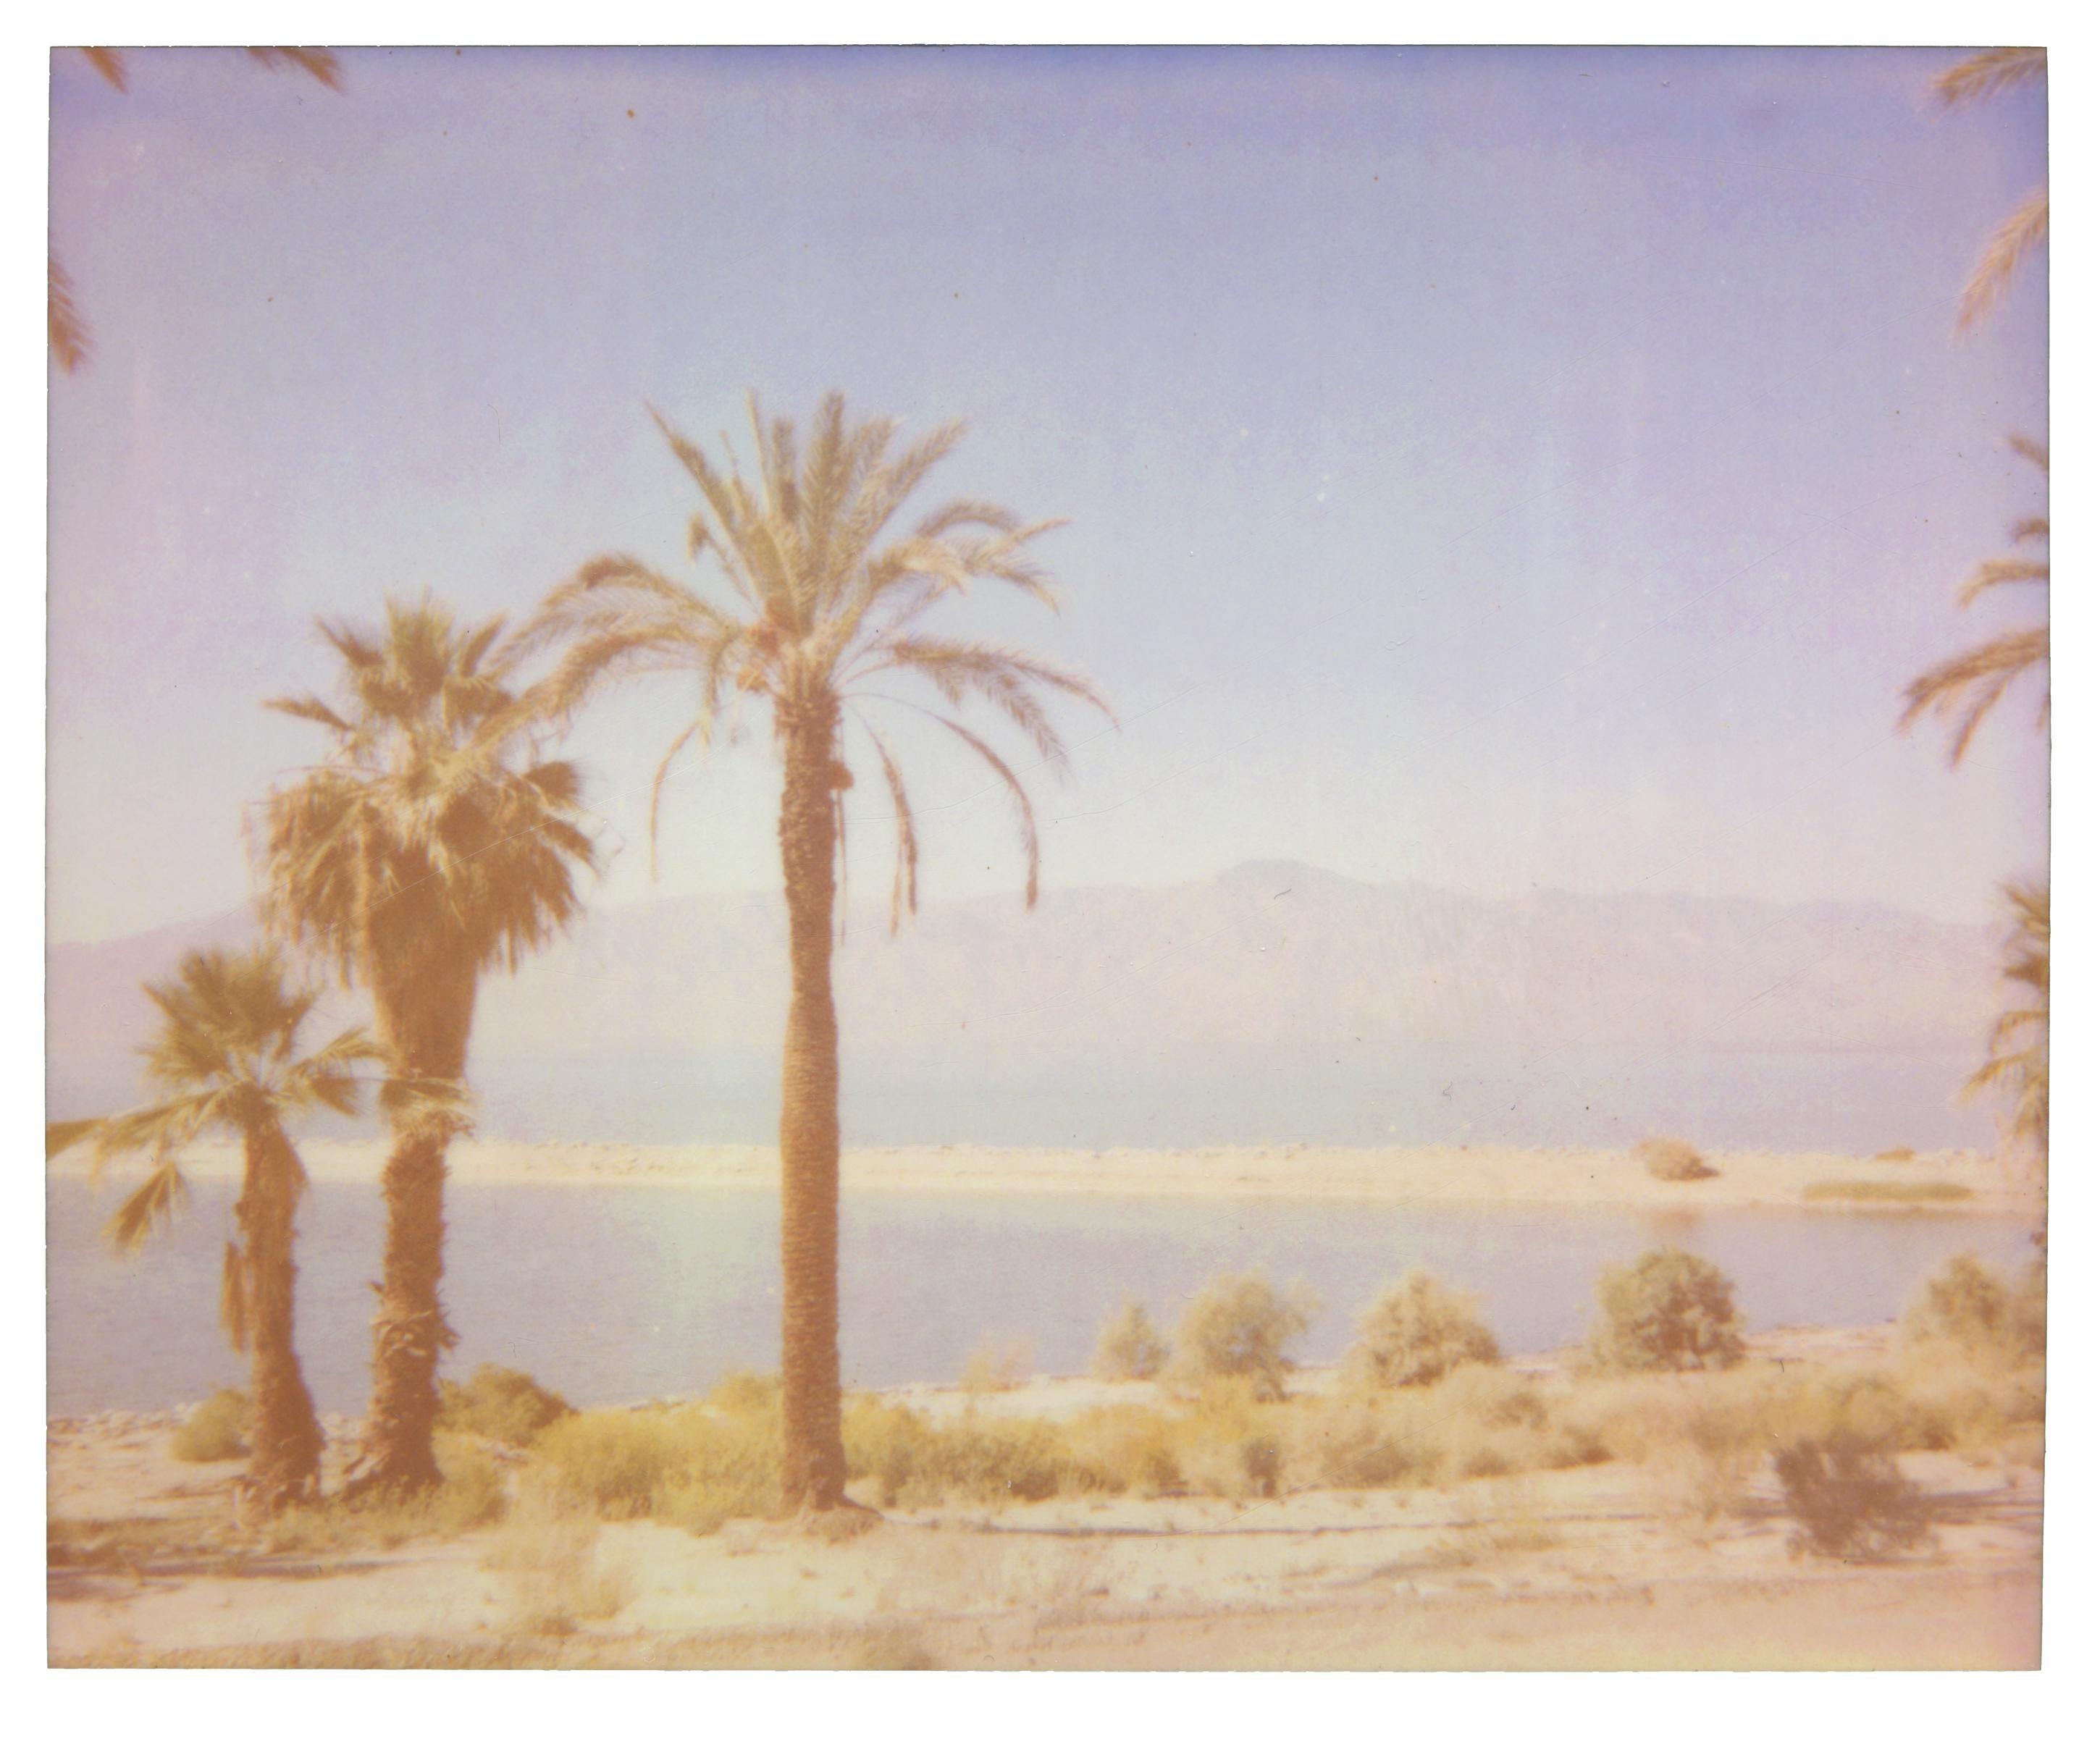 Stefanie Schneider Black and White Photograph - North Shore Mirage (California Badlands) - Contemporary, 21st Century, Polaroid